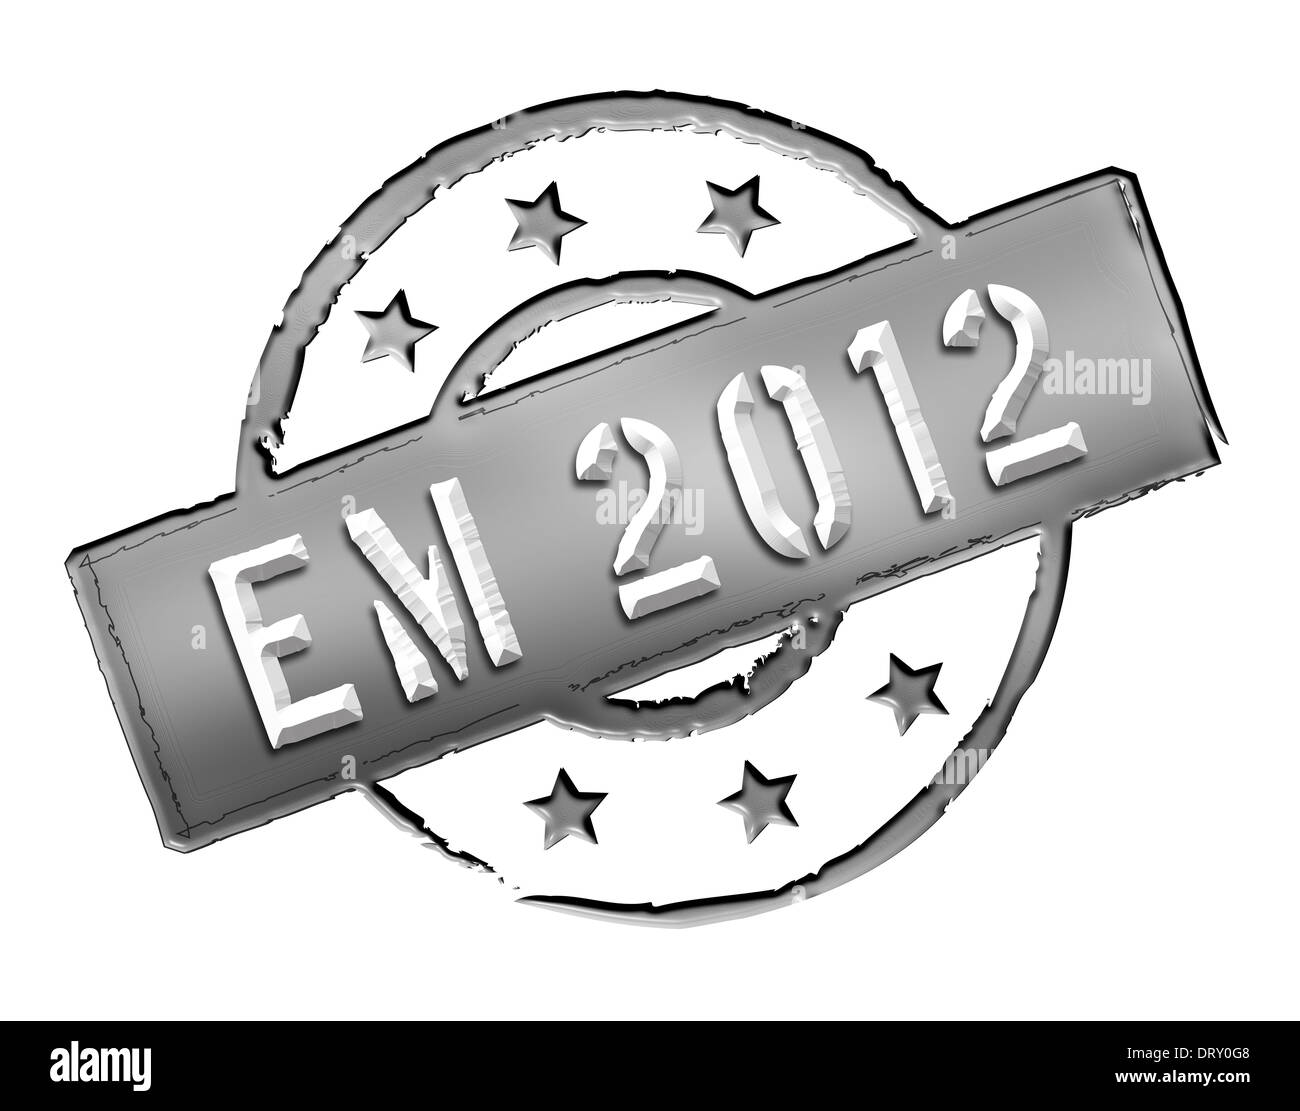 EM 2012 - Stamp Stock Photo